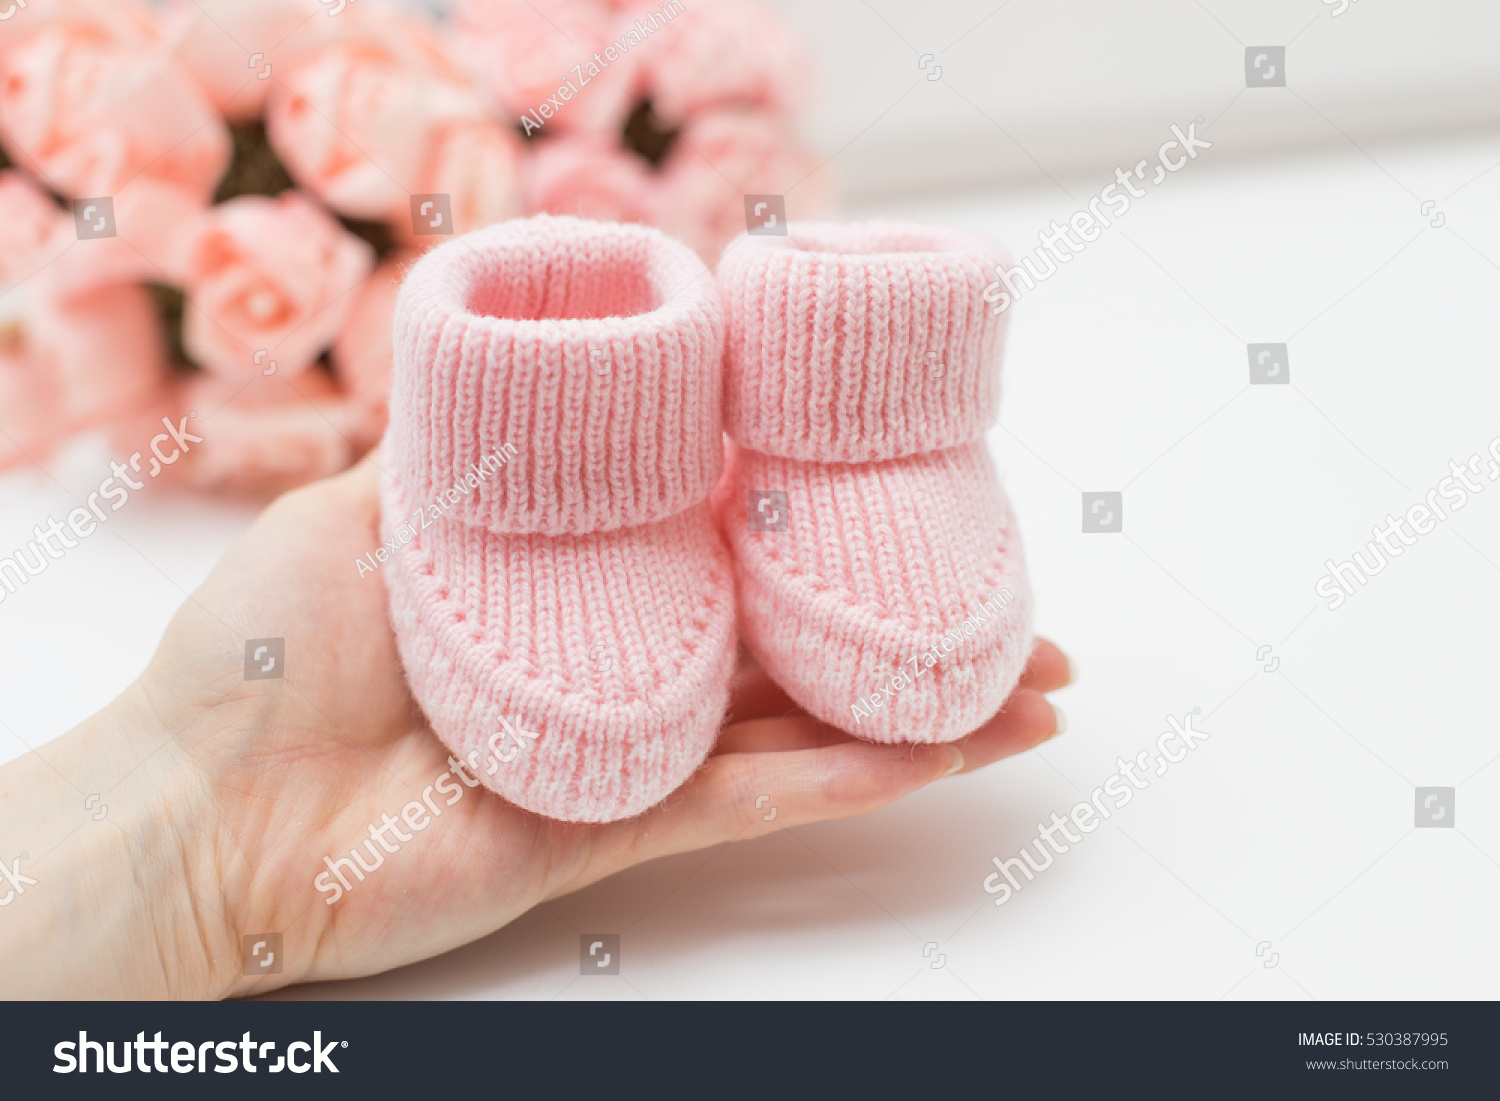 pink newborn shoes